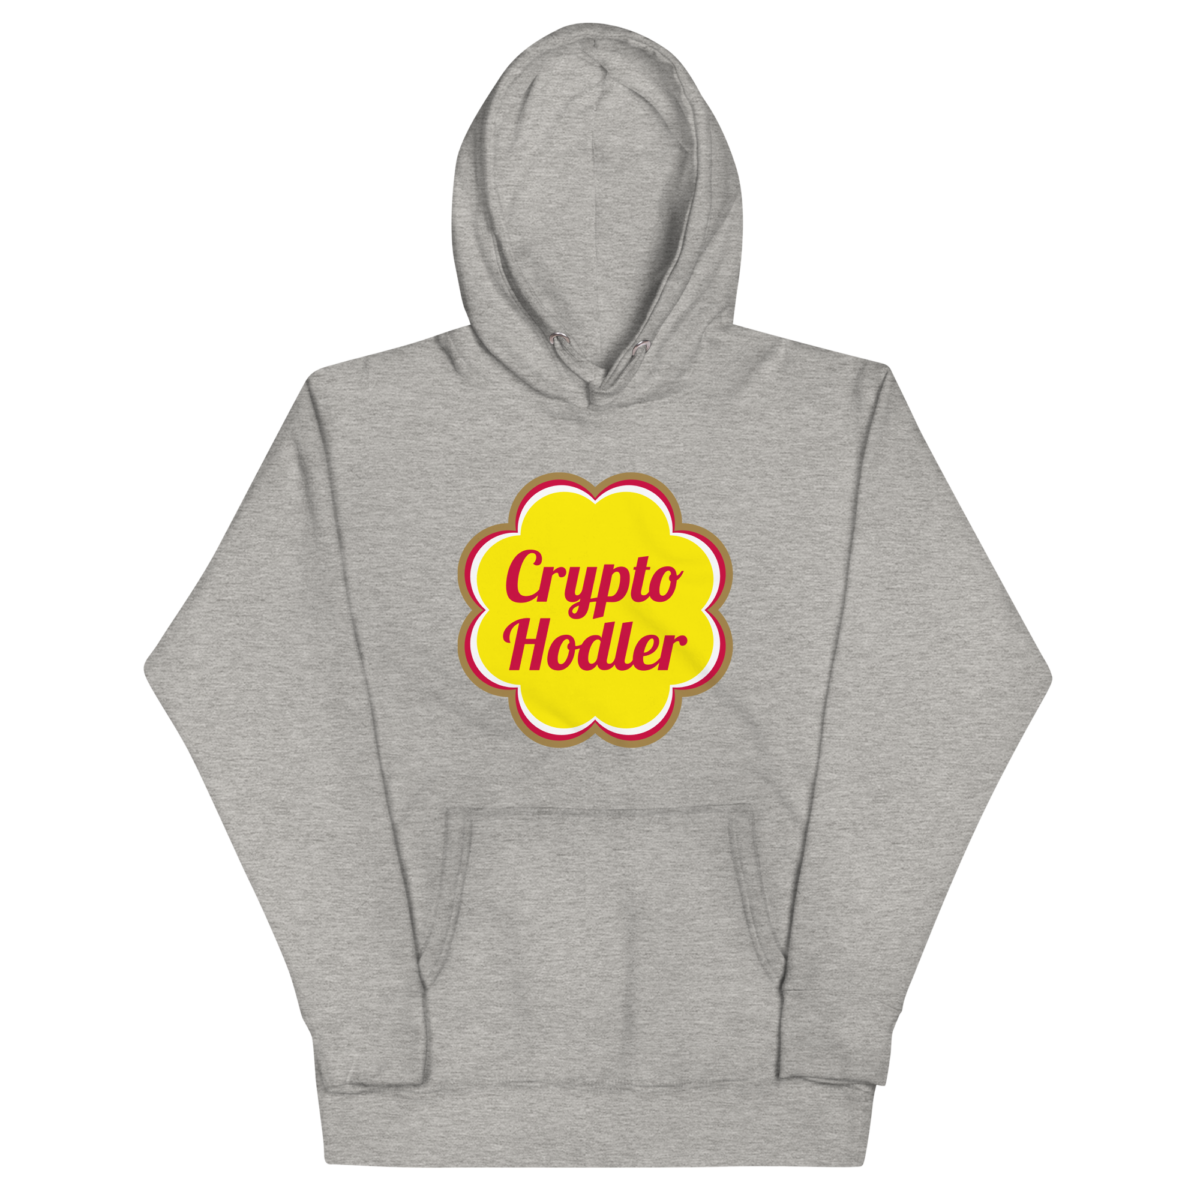 unisex premium hoodie carbon grey front 6357a8b8018c5 - Crypto Hodler Hoodie